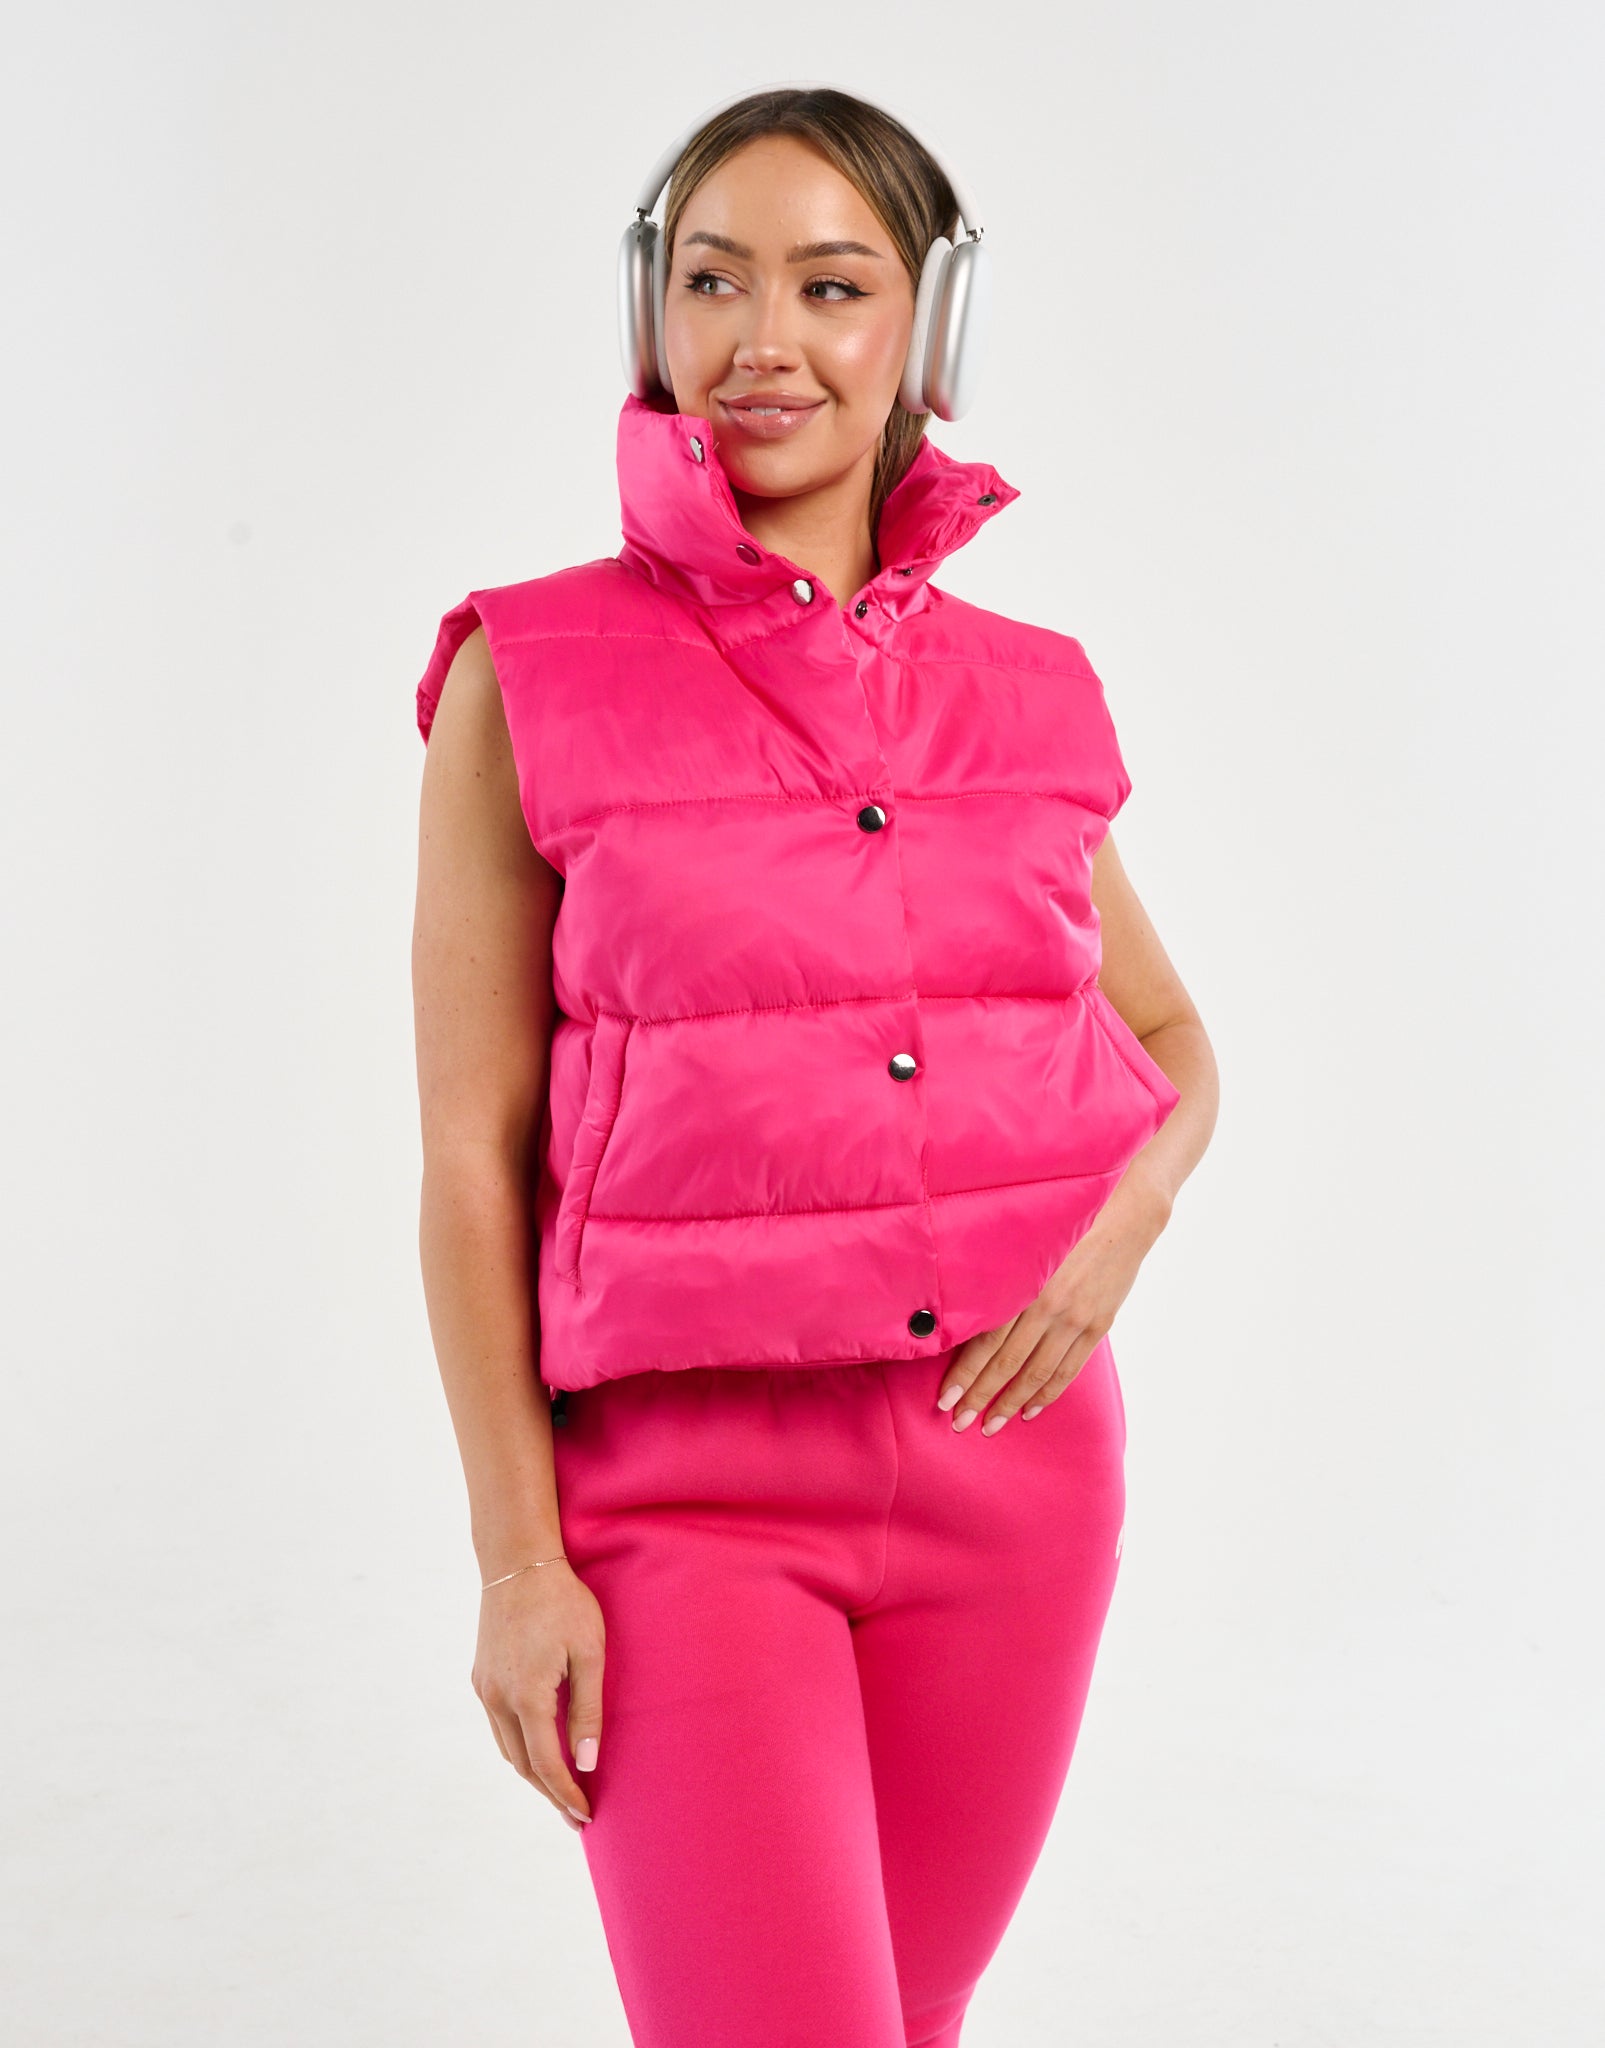 Affirm Puffer Vest - Bright Pink